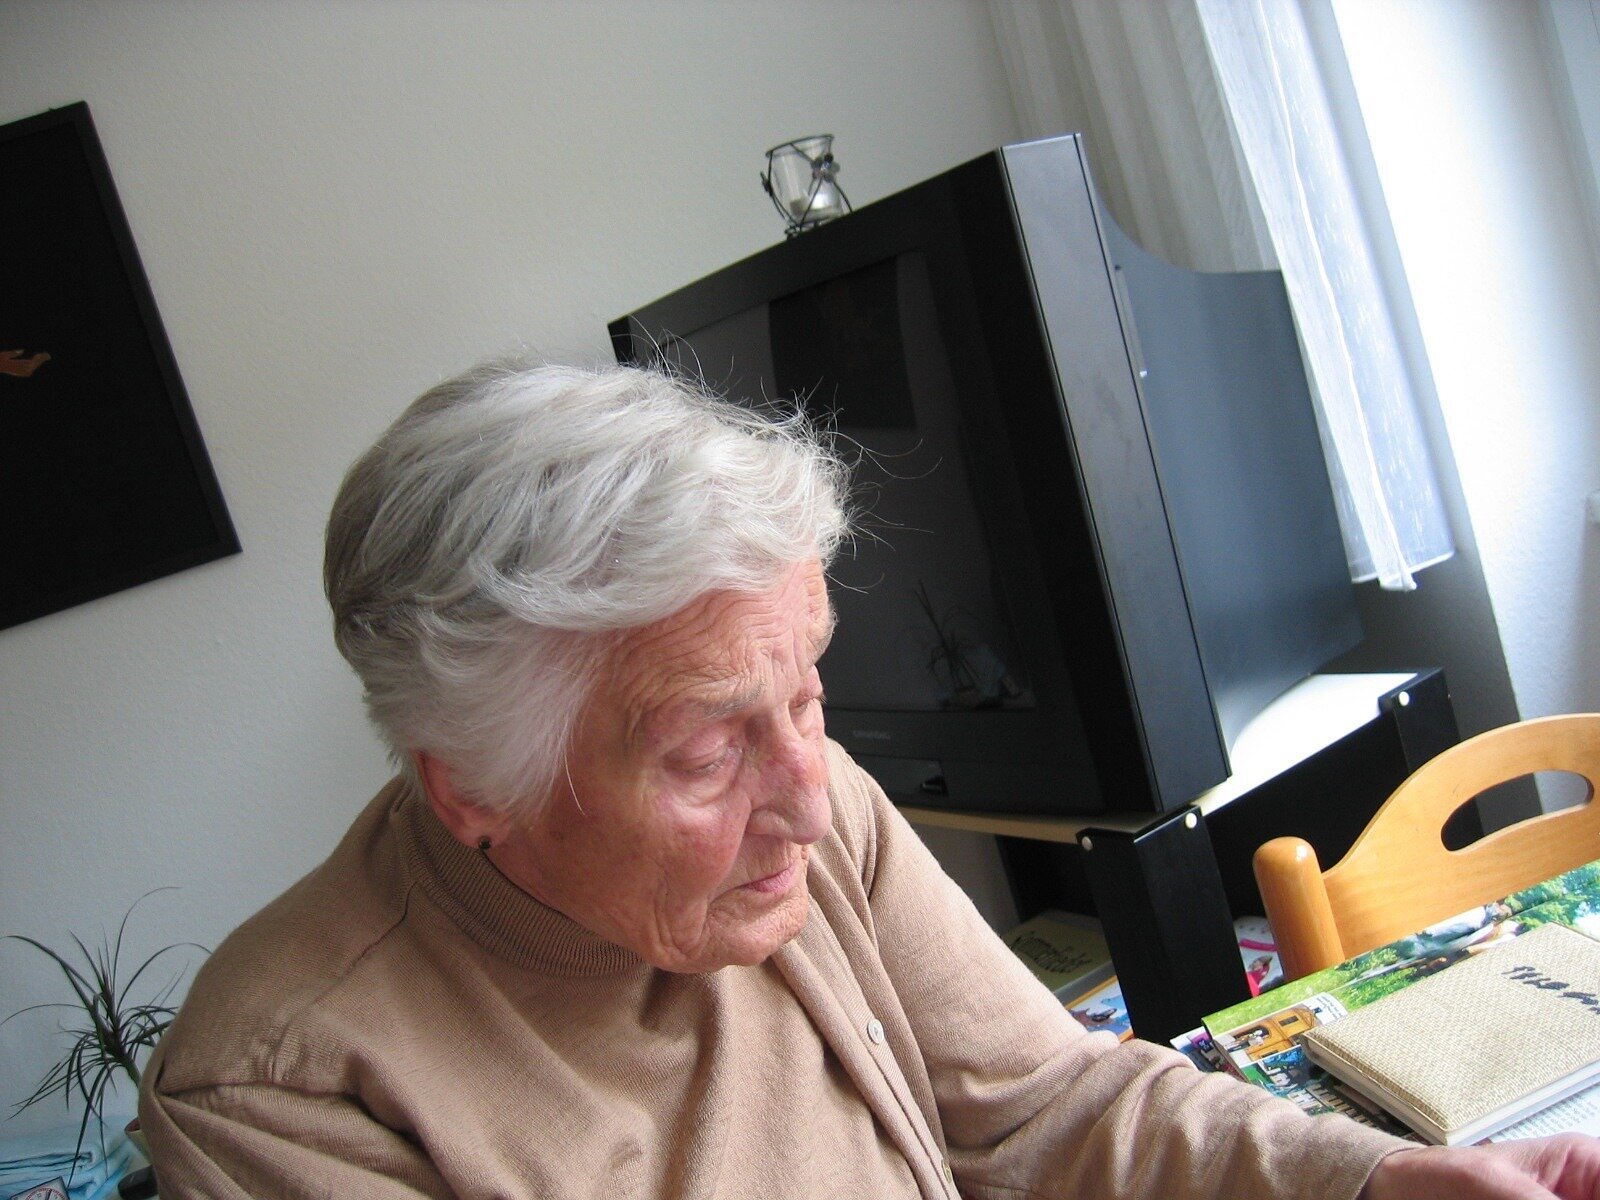 Active social lives can help dementia patients, caregivers thrive